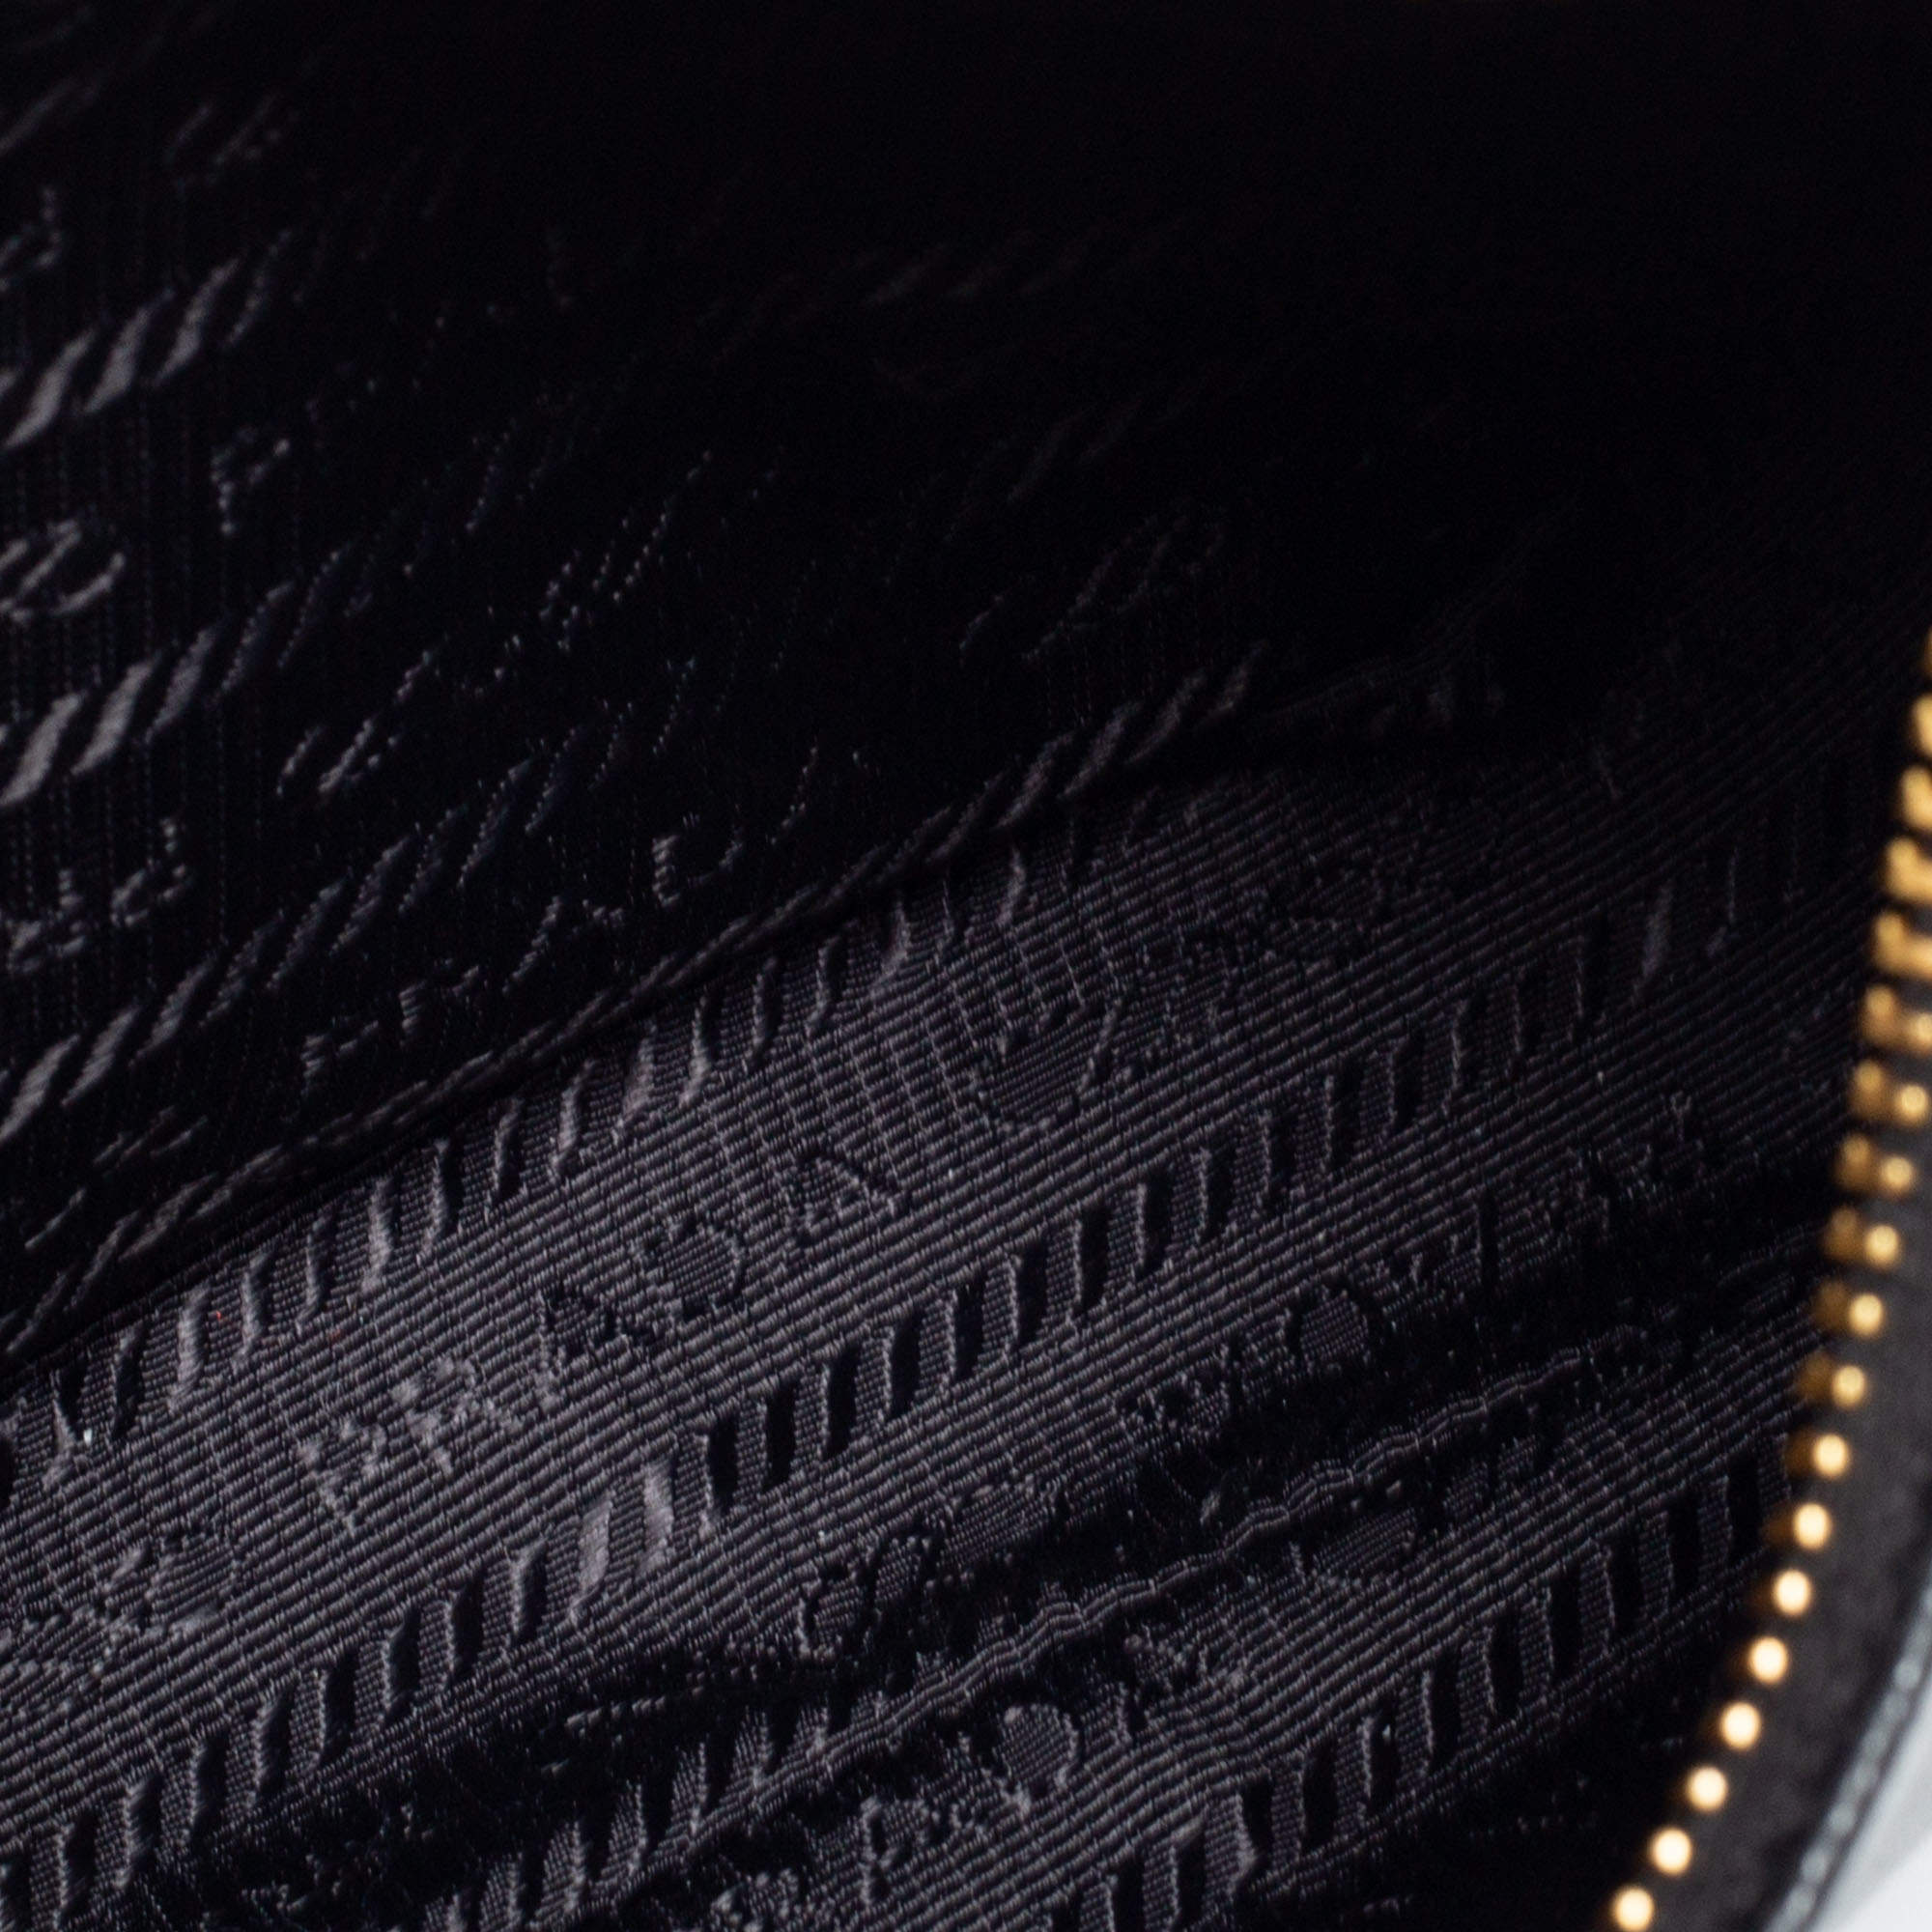 Prada Saffiano Lux Mini Bauletto Bag - Black Mini Bags, Handbags -  PRA214039